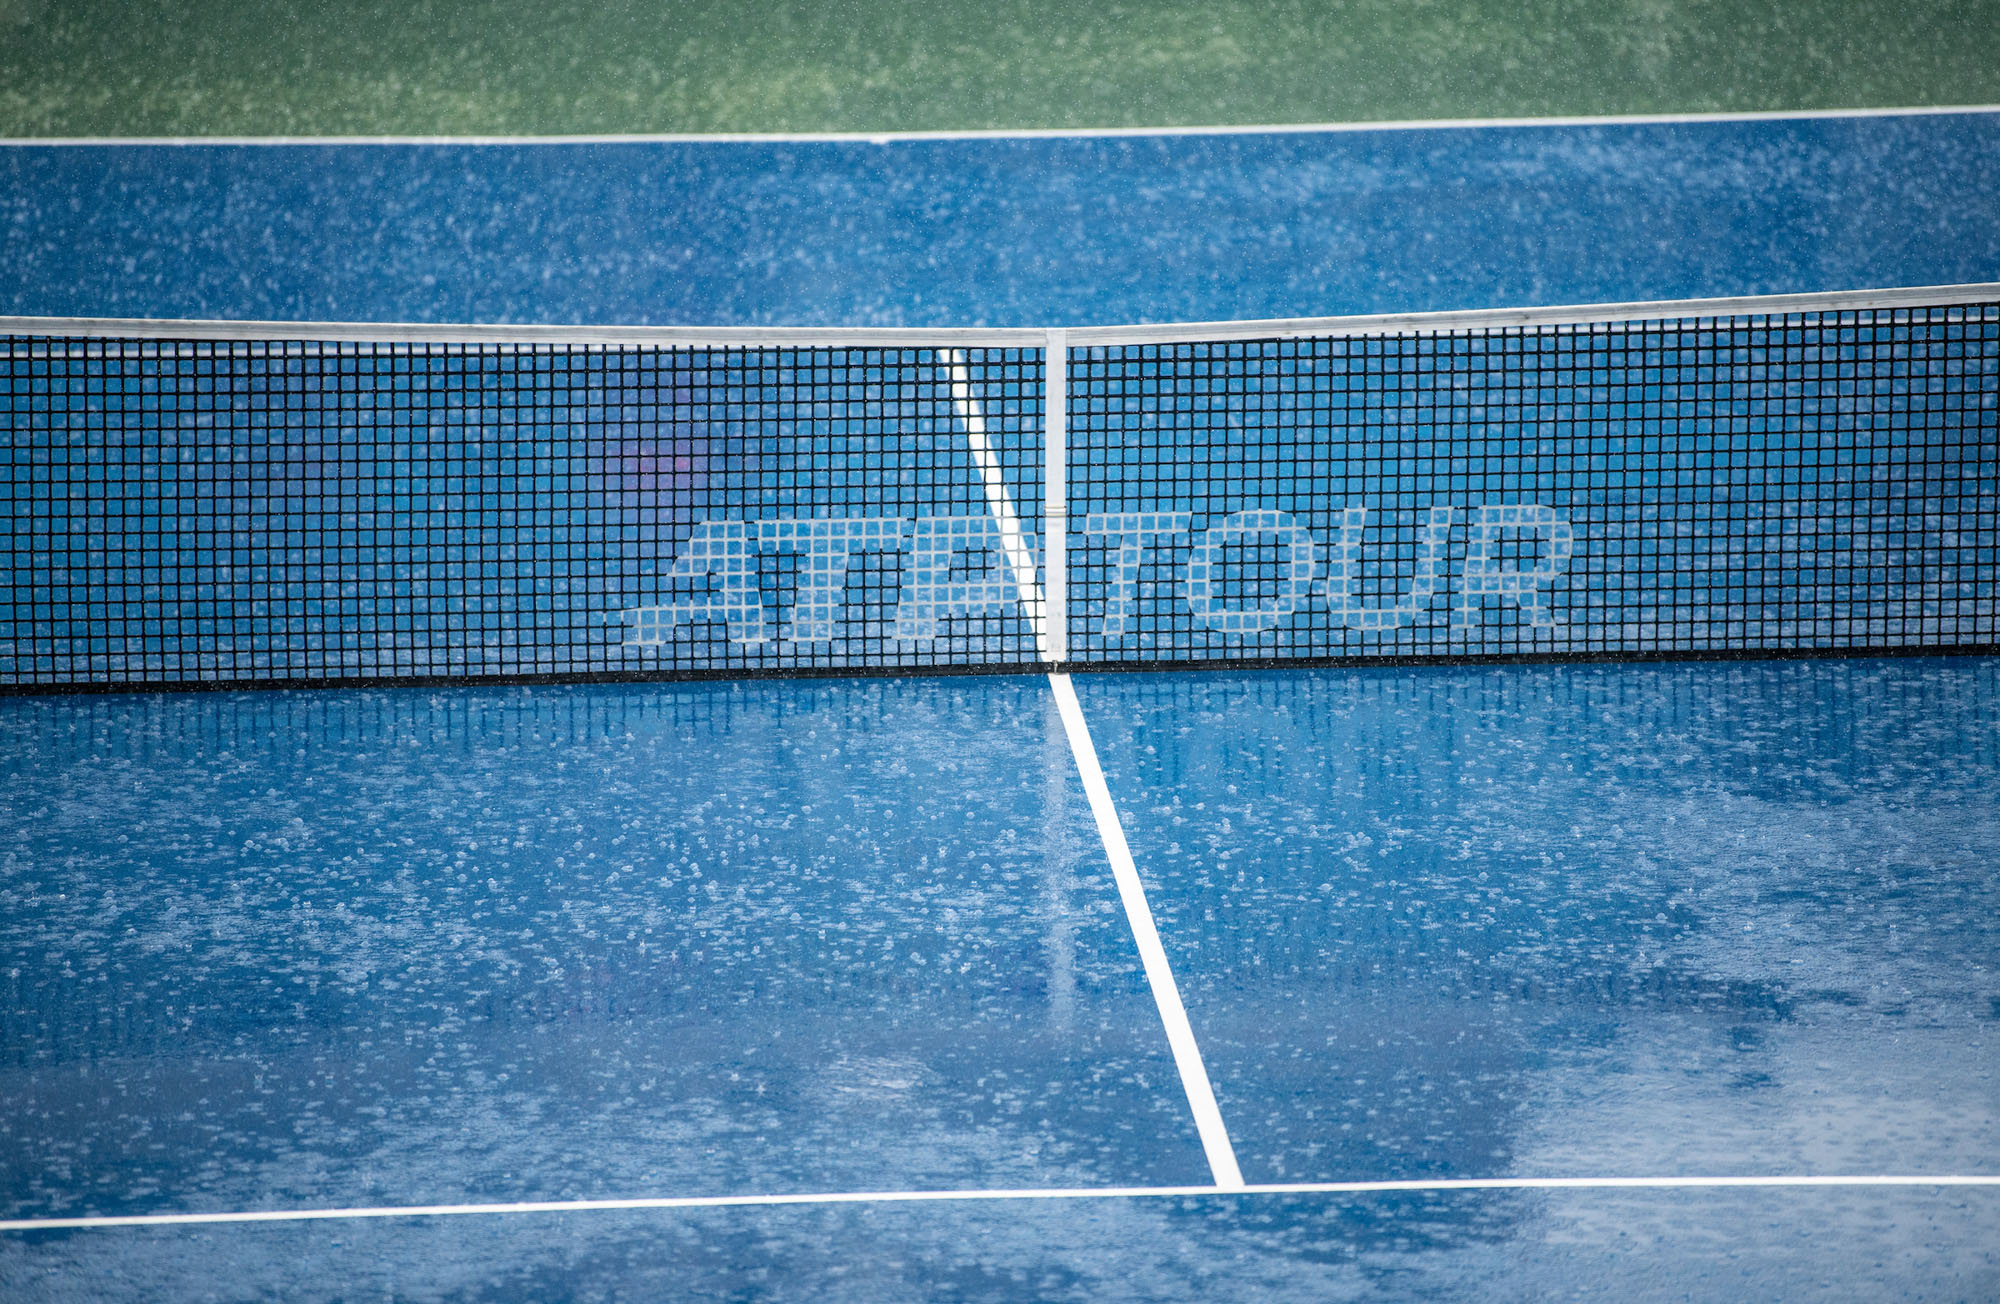 raining on the court